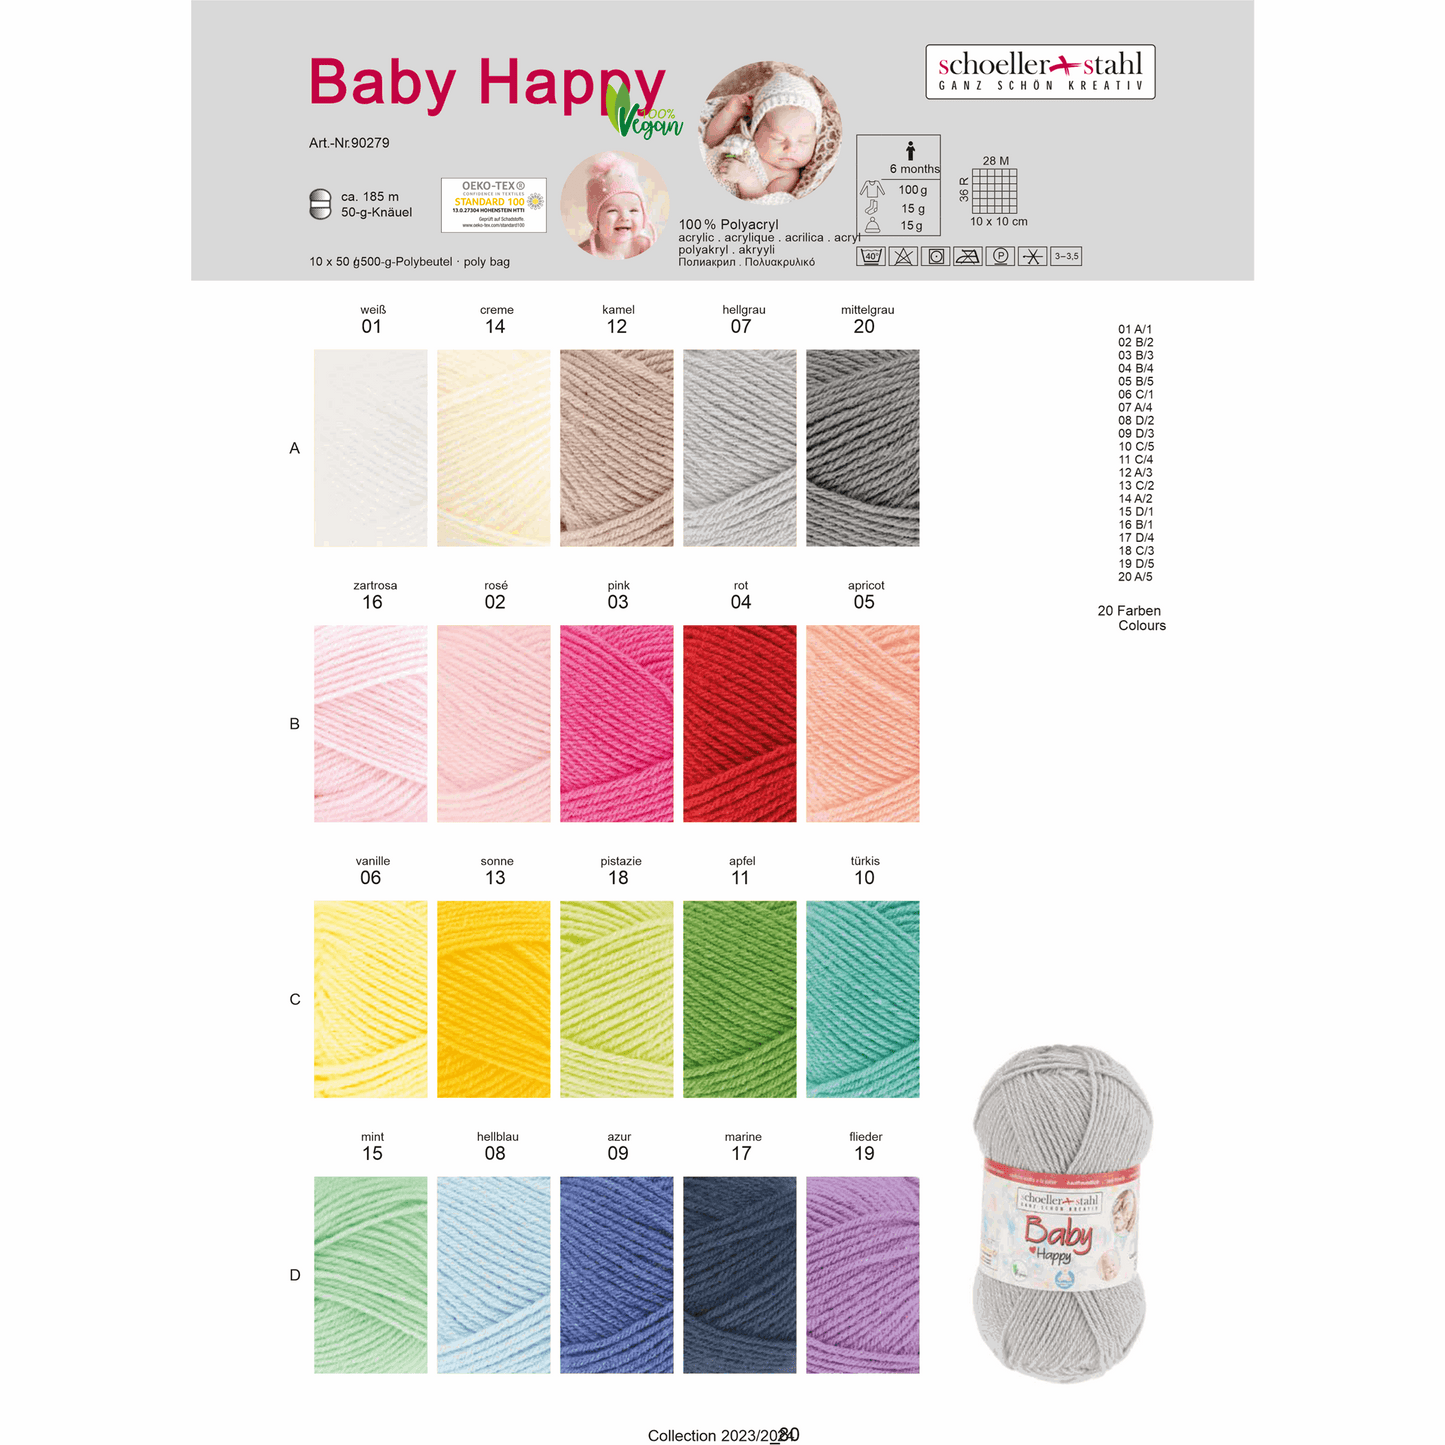 Baby happy 50g, 90279, Farbe 11, apfel